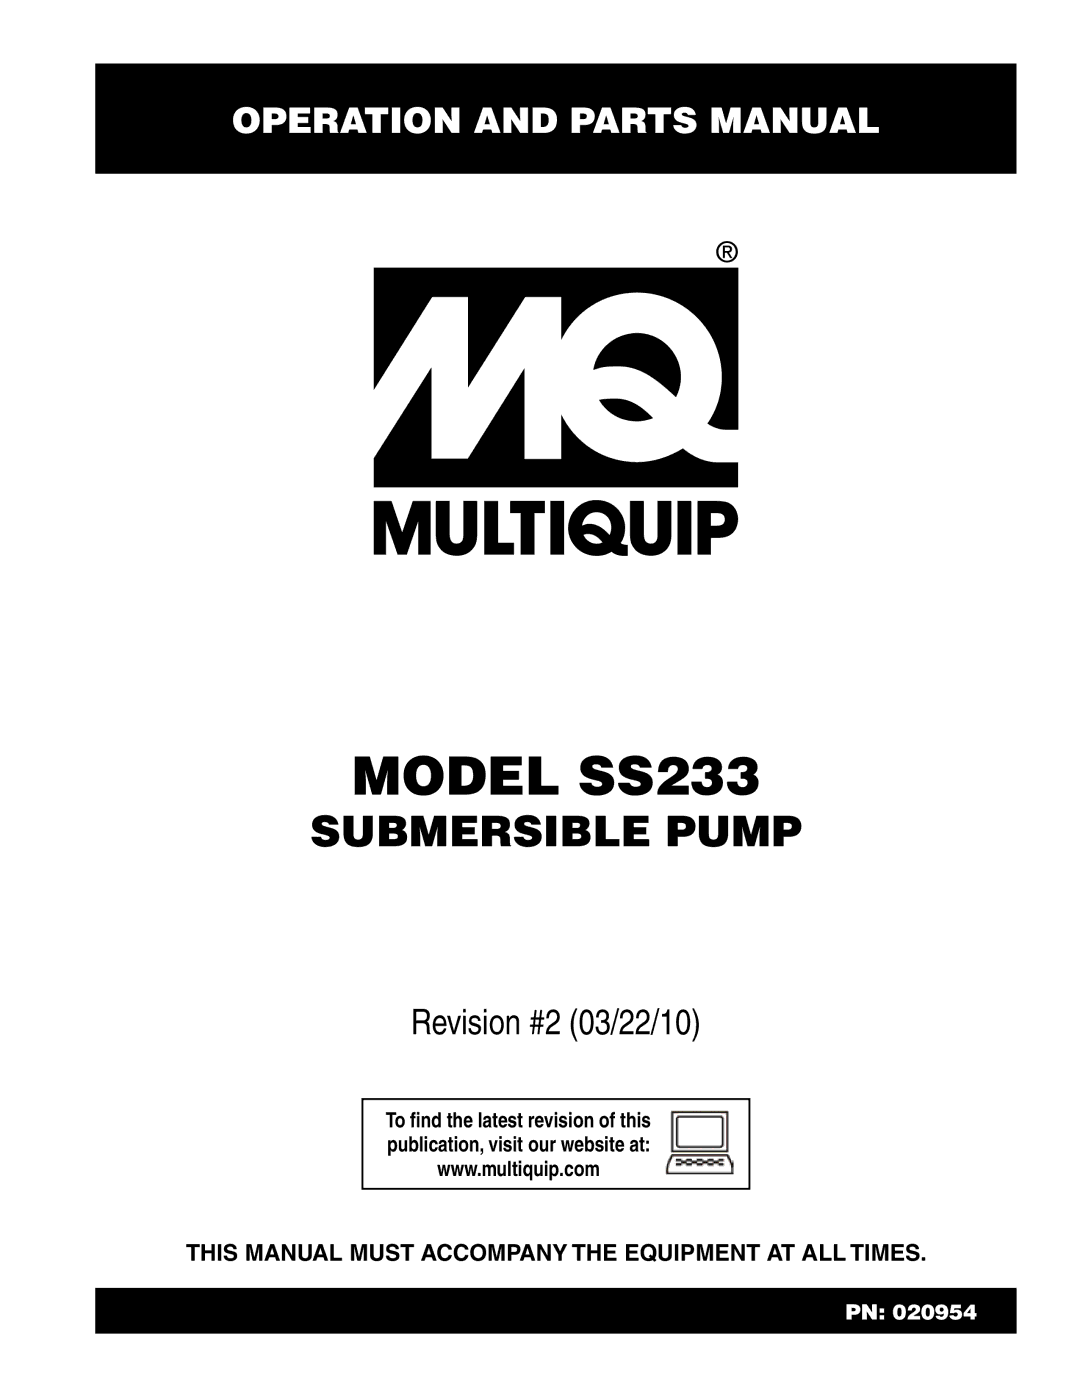 Multiquip SS233 manual Model ss233 